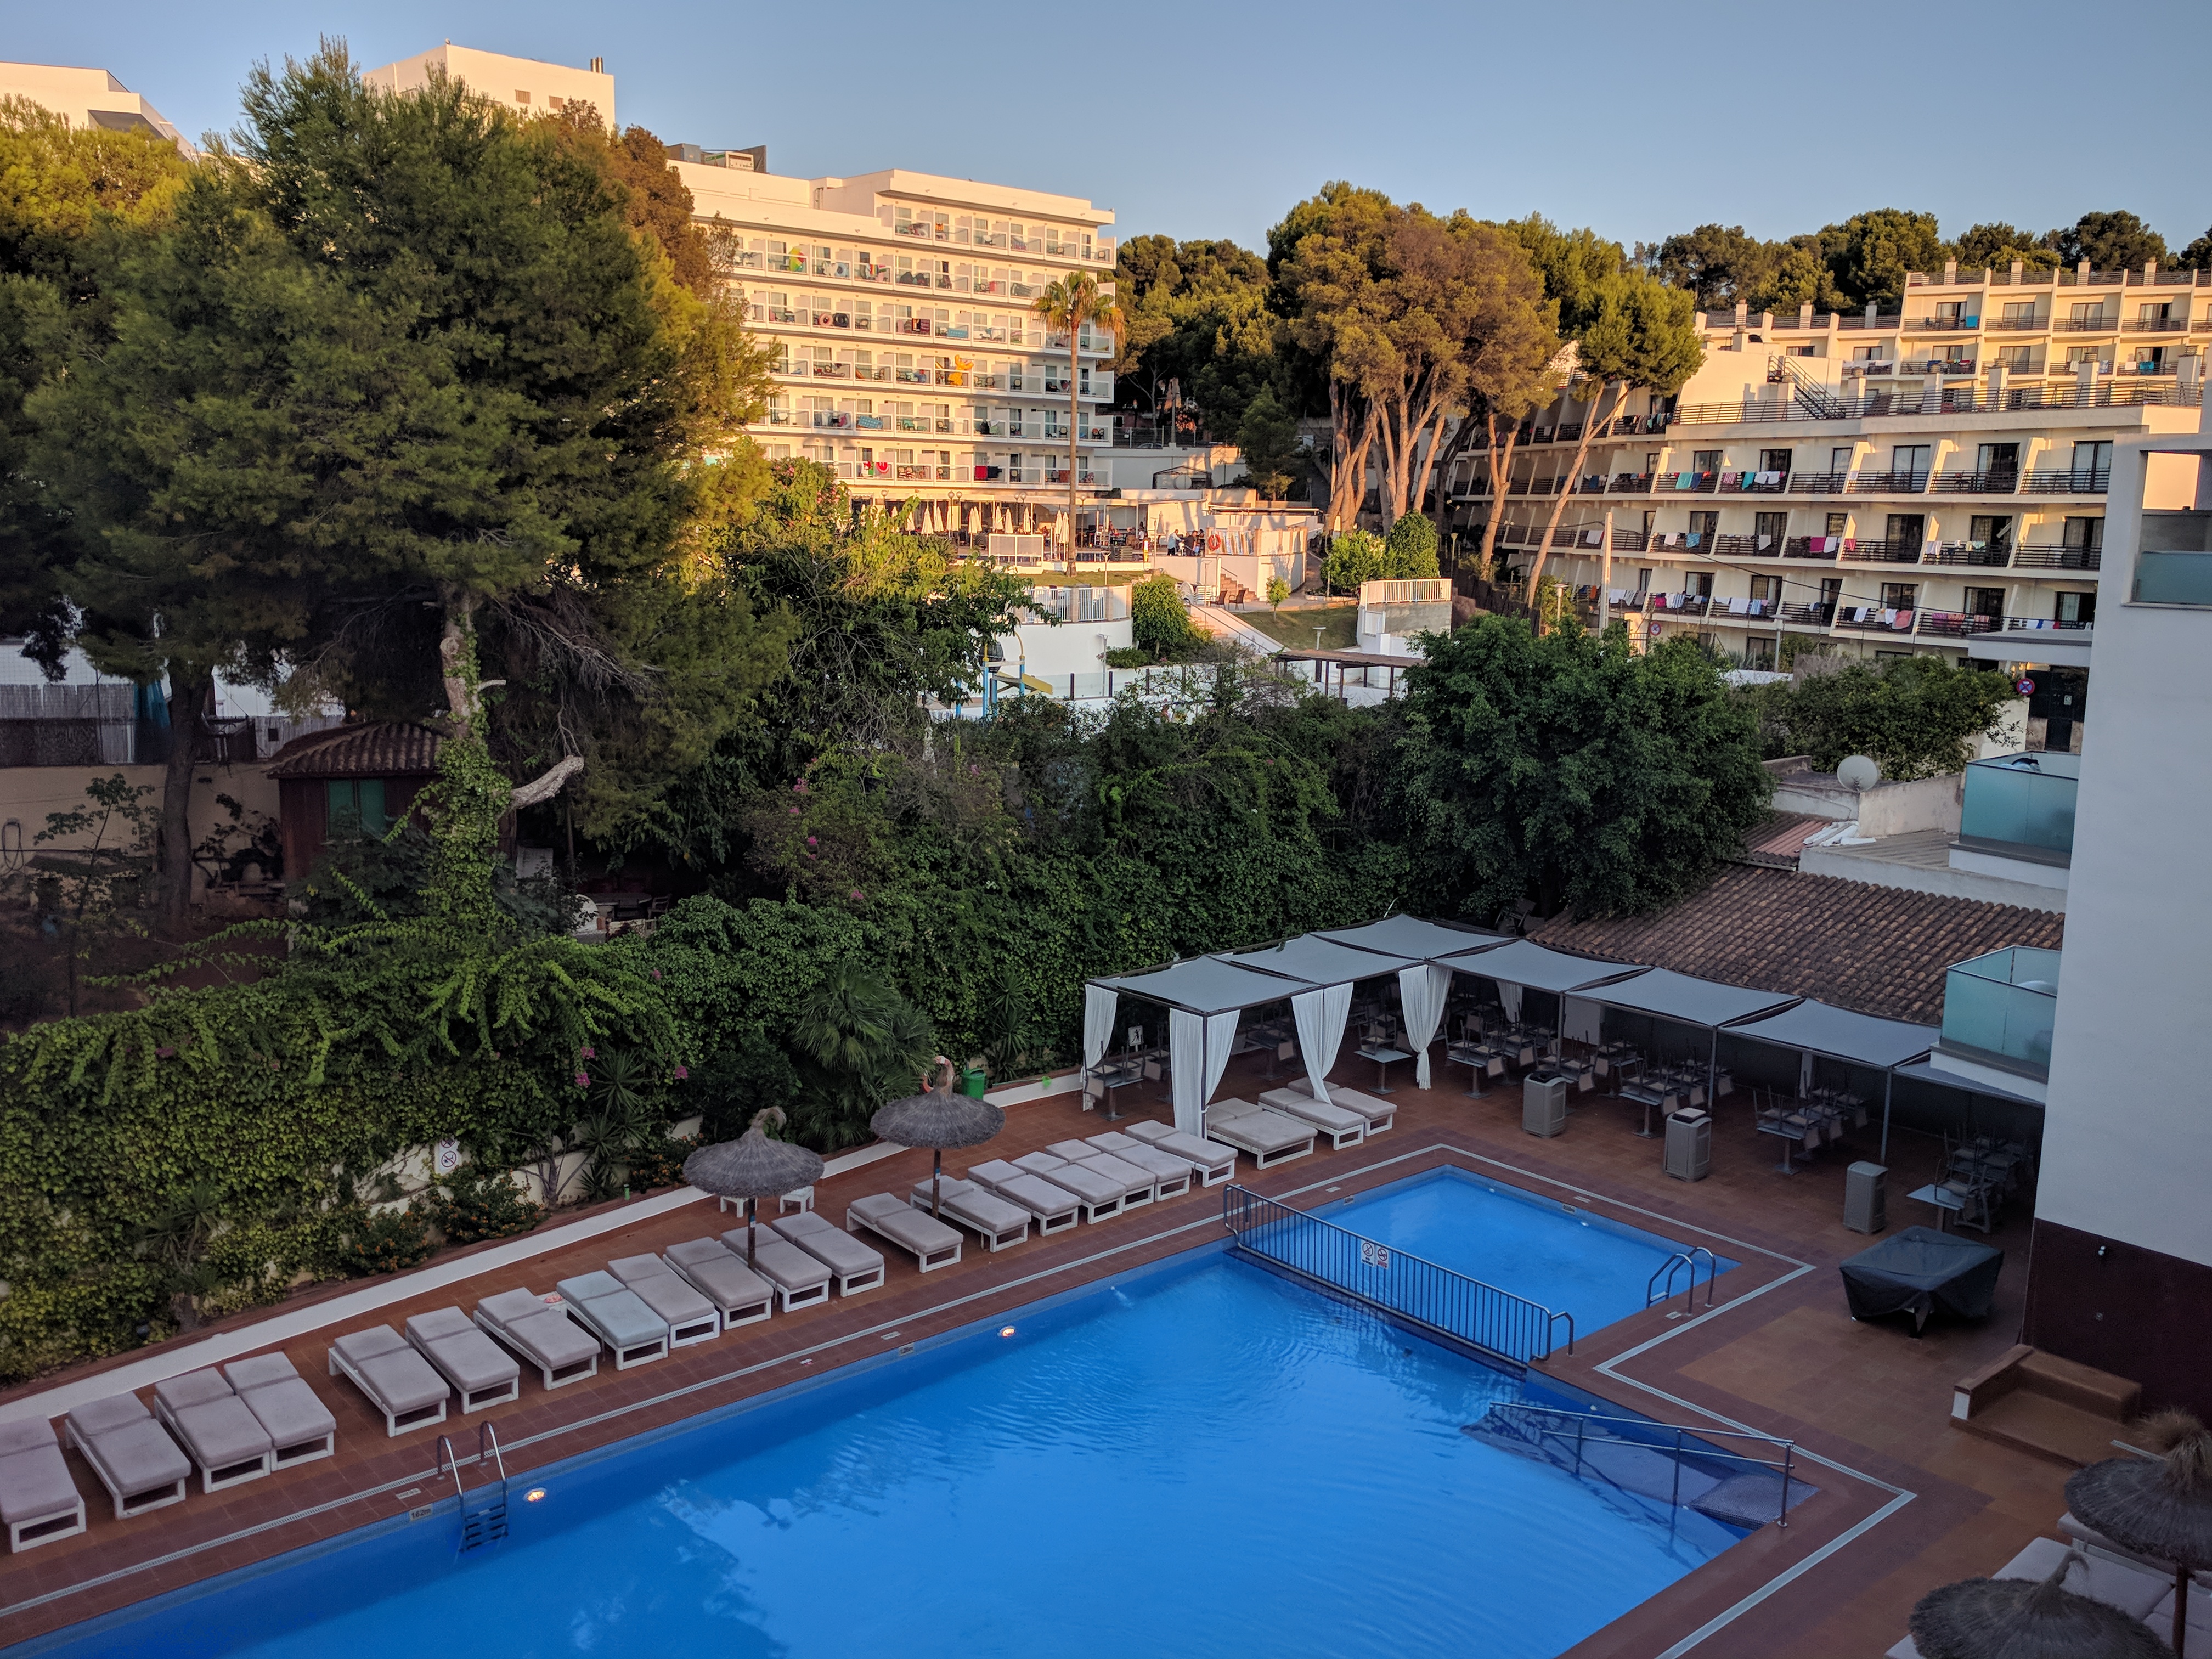 Picture of a place: Leonardo Royal Hotel Mallorca